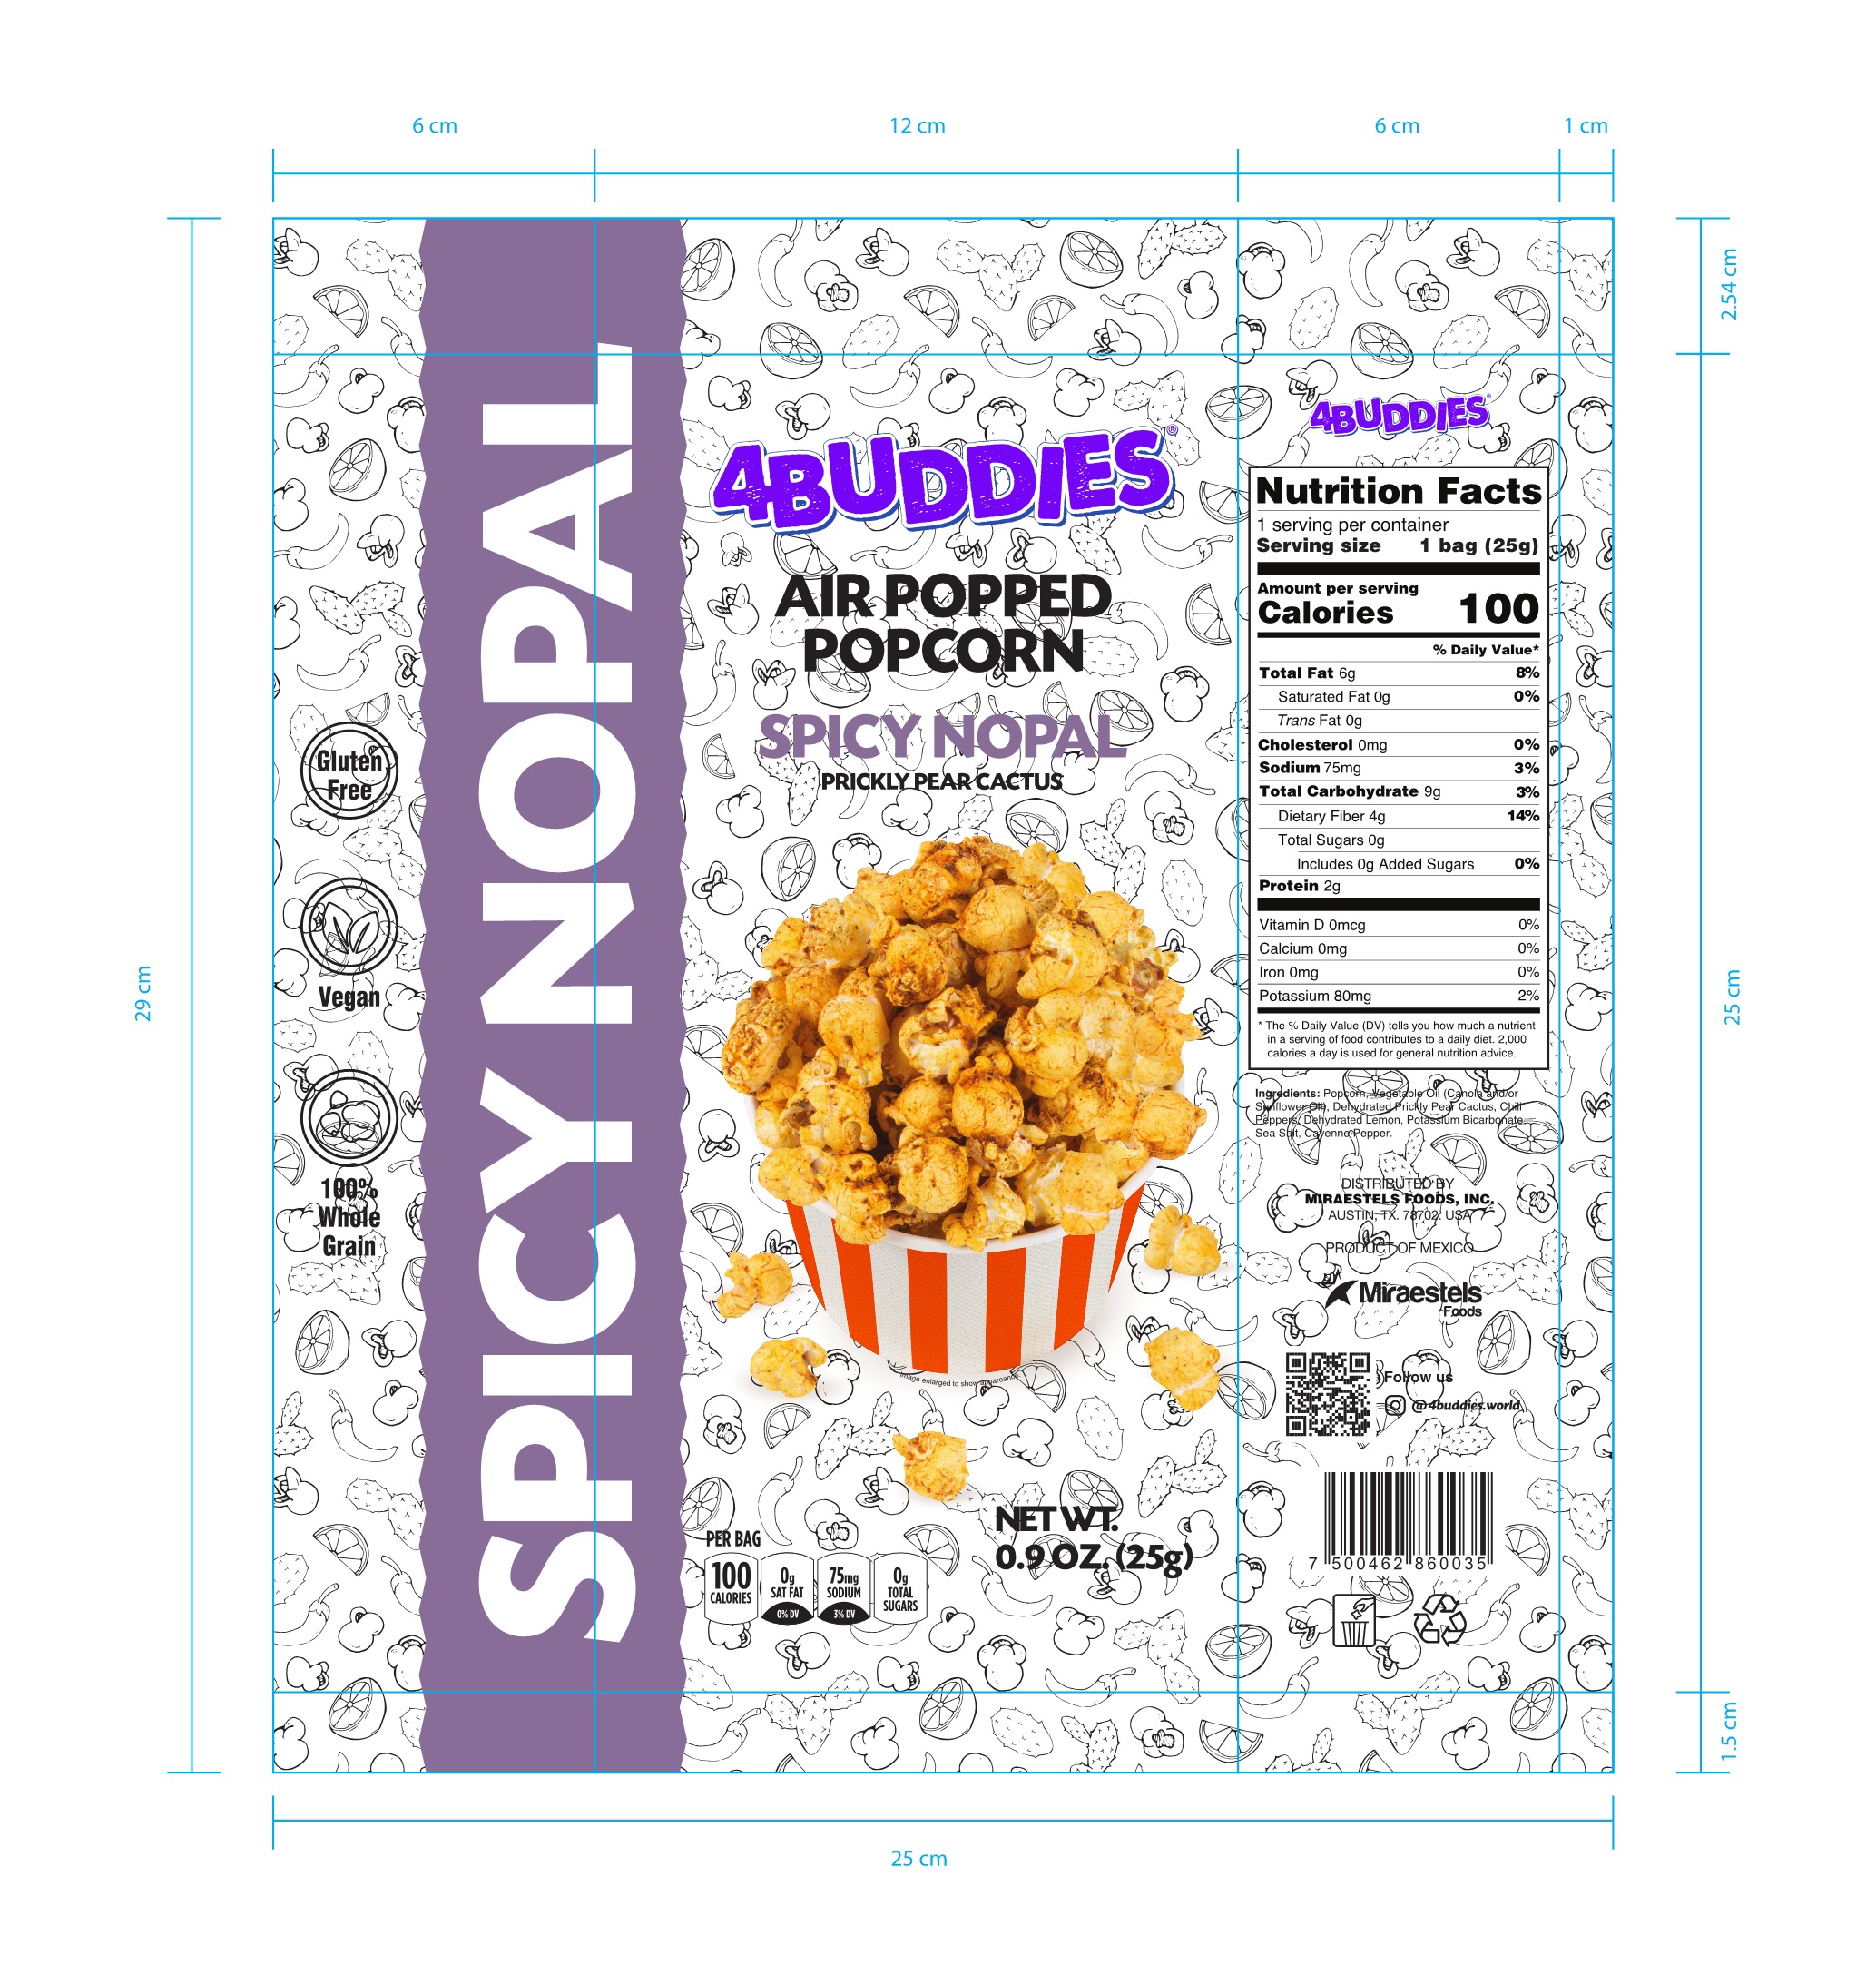 4BUDDIES Air Popped Popcorn Spicy Nopal 35 units per case 26 g